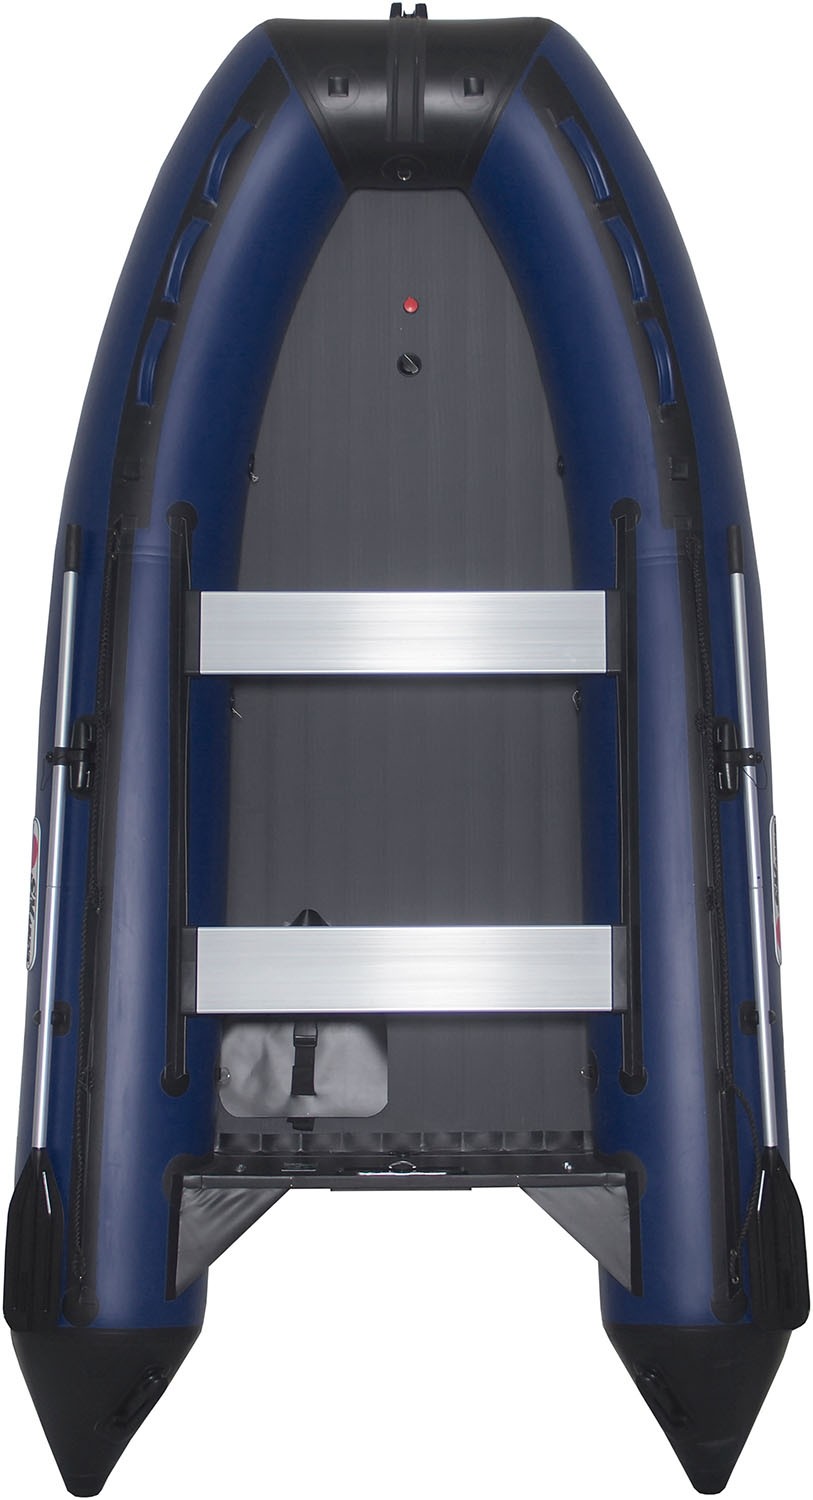 Лодка SMarine AIR MAX - 360 (темно-синий/черный)